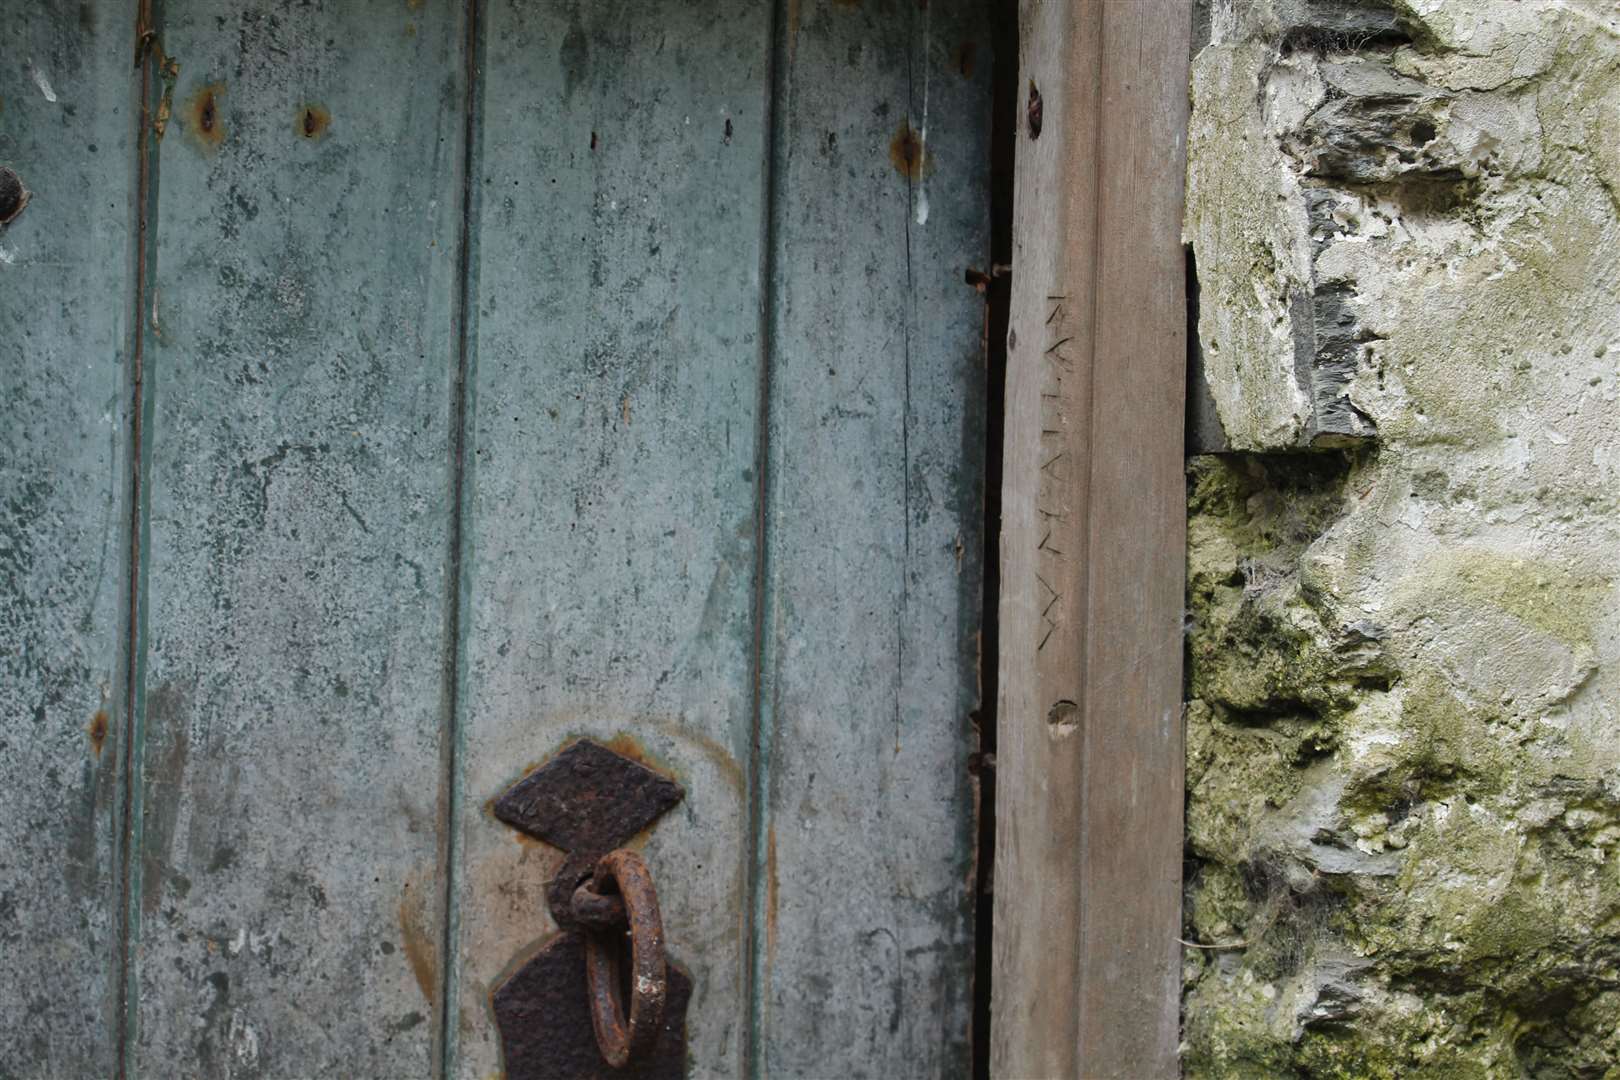 Graffiti reading “W McAllan” on the connecting door. Picture: John Davidson